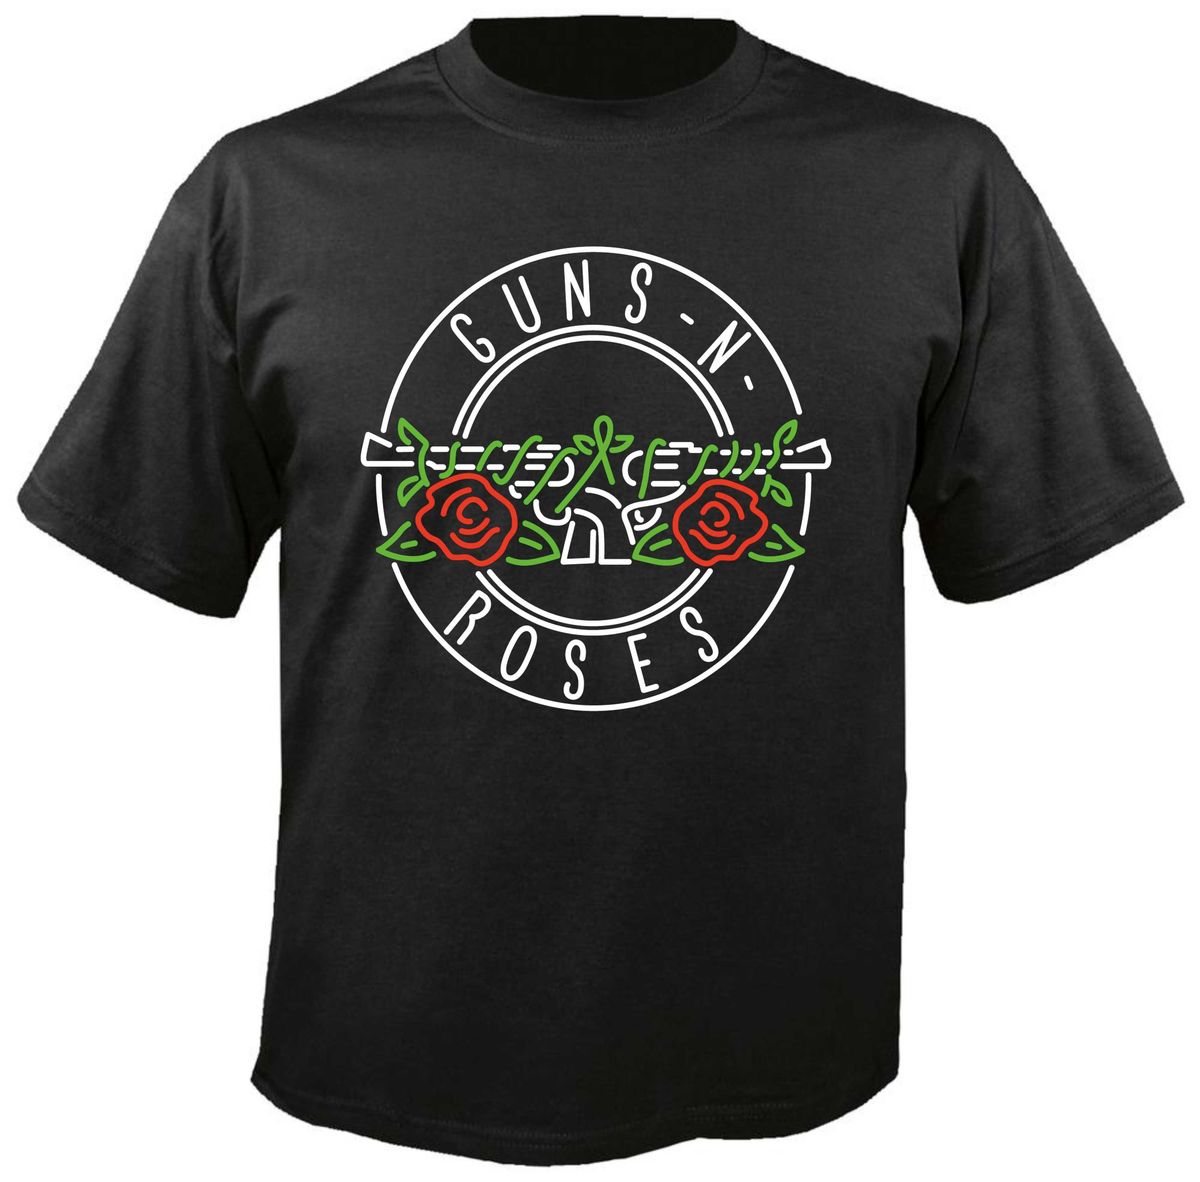 Guns N Roses Logo Black T-Shirt – Metal & Rock T-shirts and Accessories